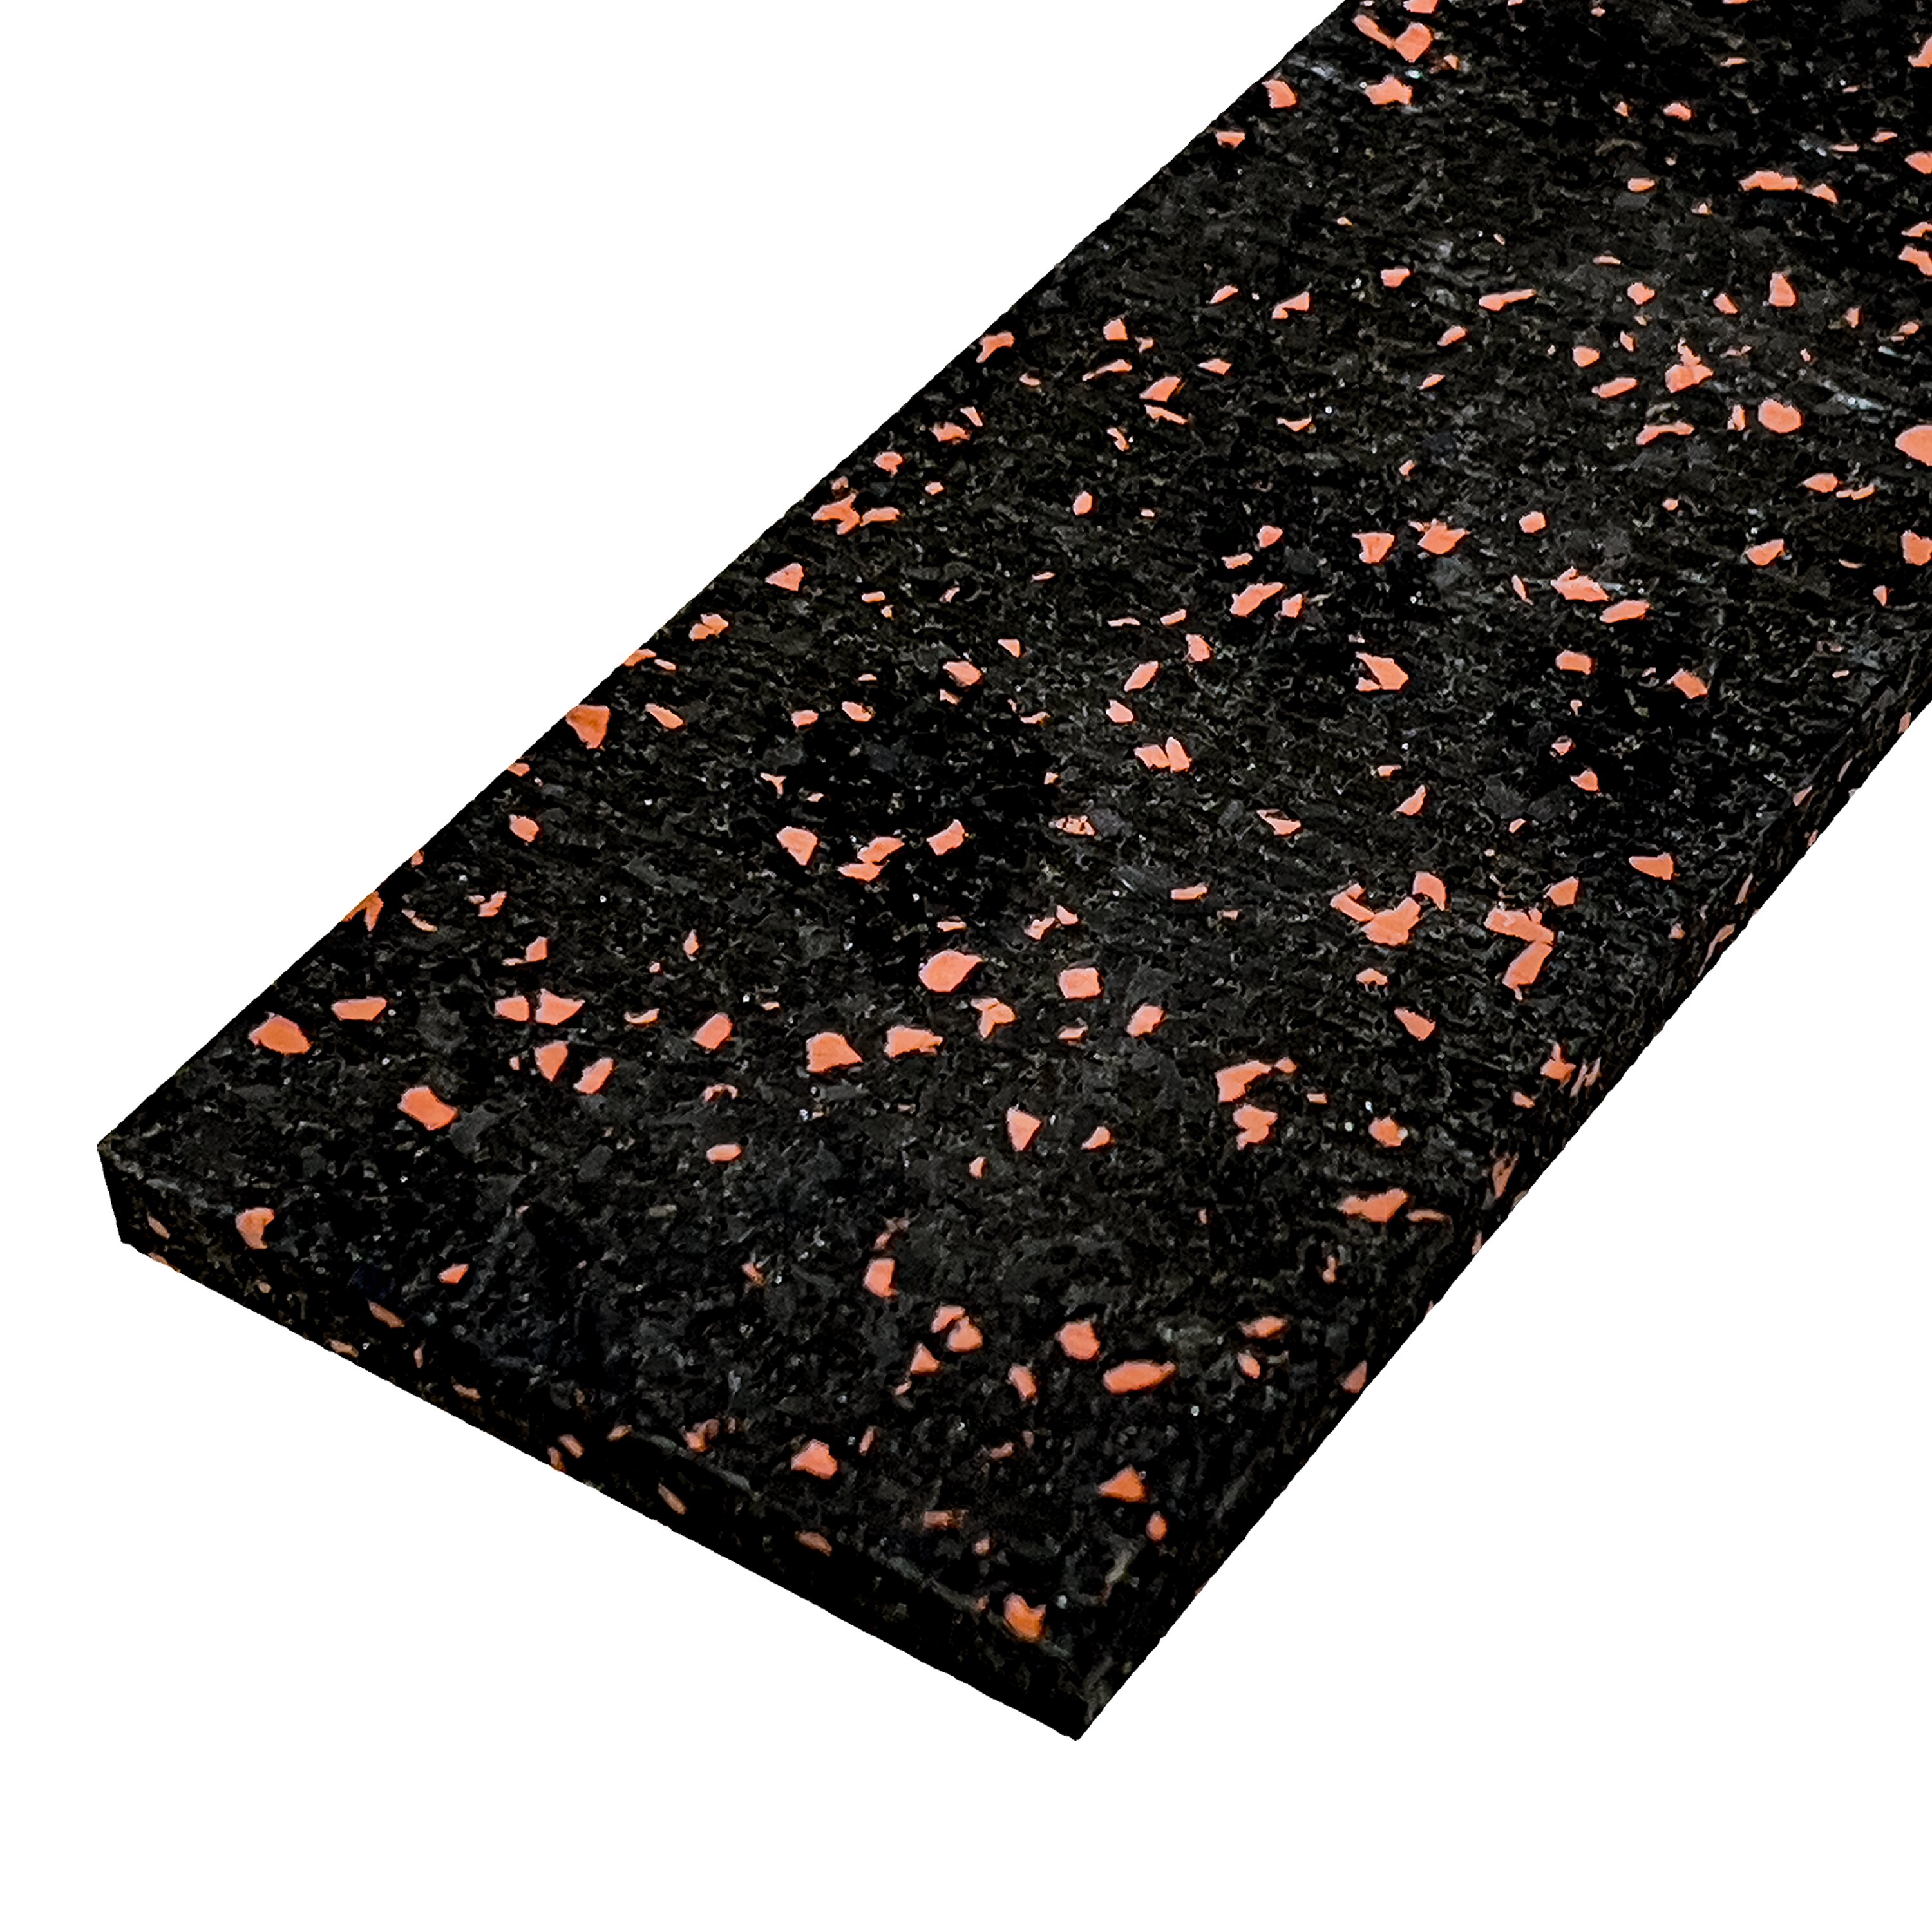 Černo-červená gumová soklová podlahová lišta FLOMA FitFlo IceFlo - délka 200 cm, šířka 7 cm, tloušťka 0,8 cm